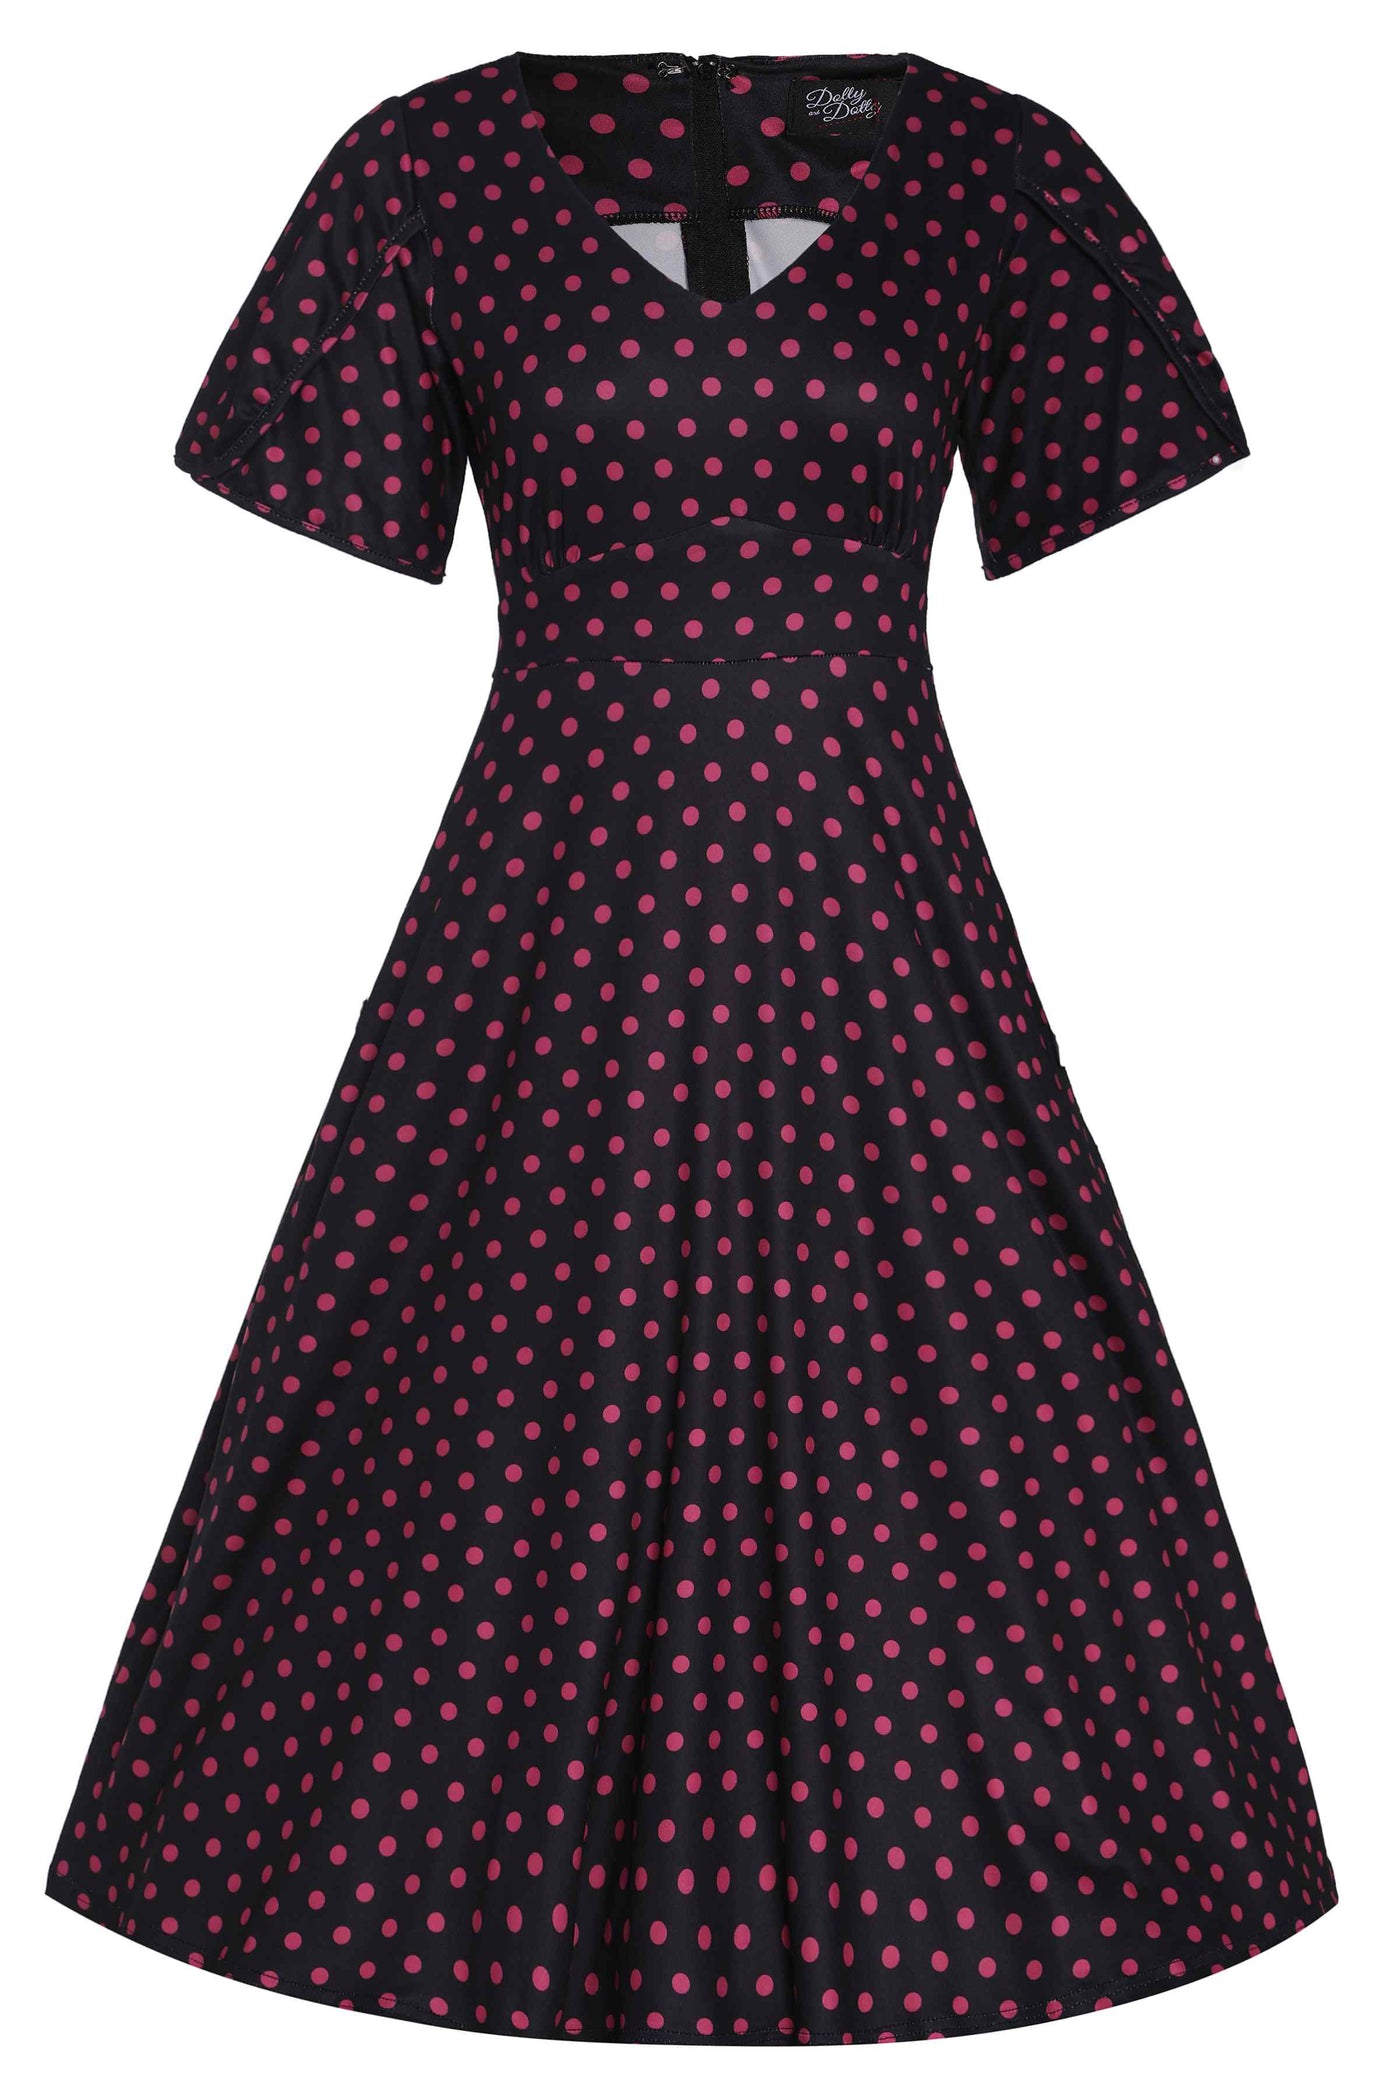 Black Polka Dot Petal Sleeved Flared Dress